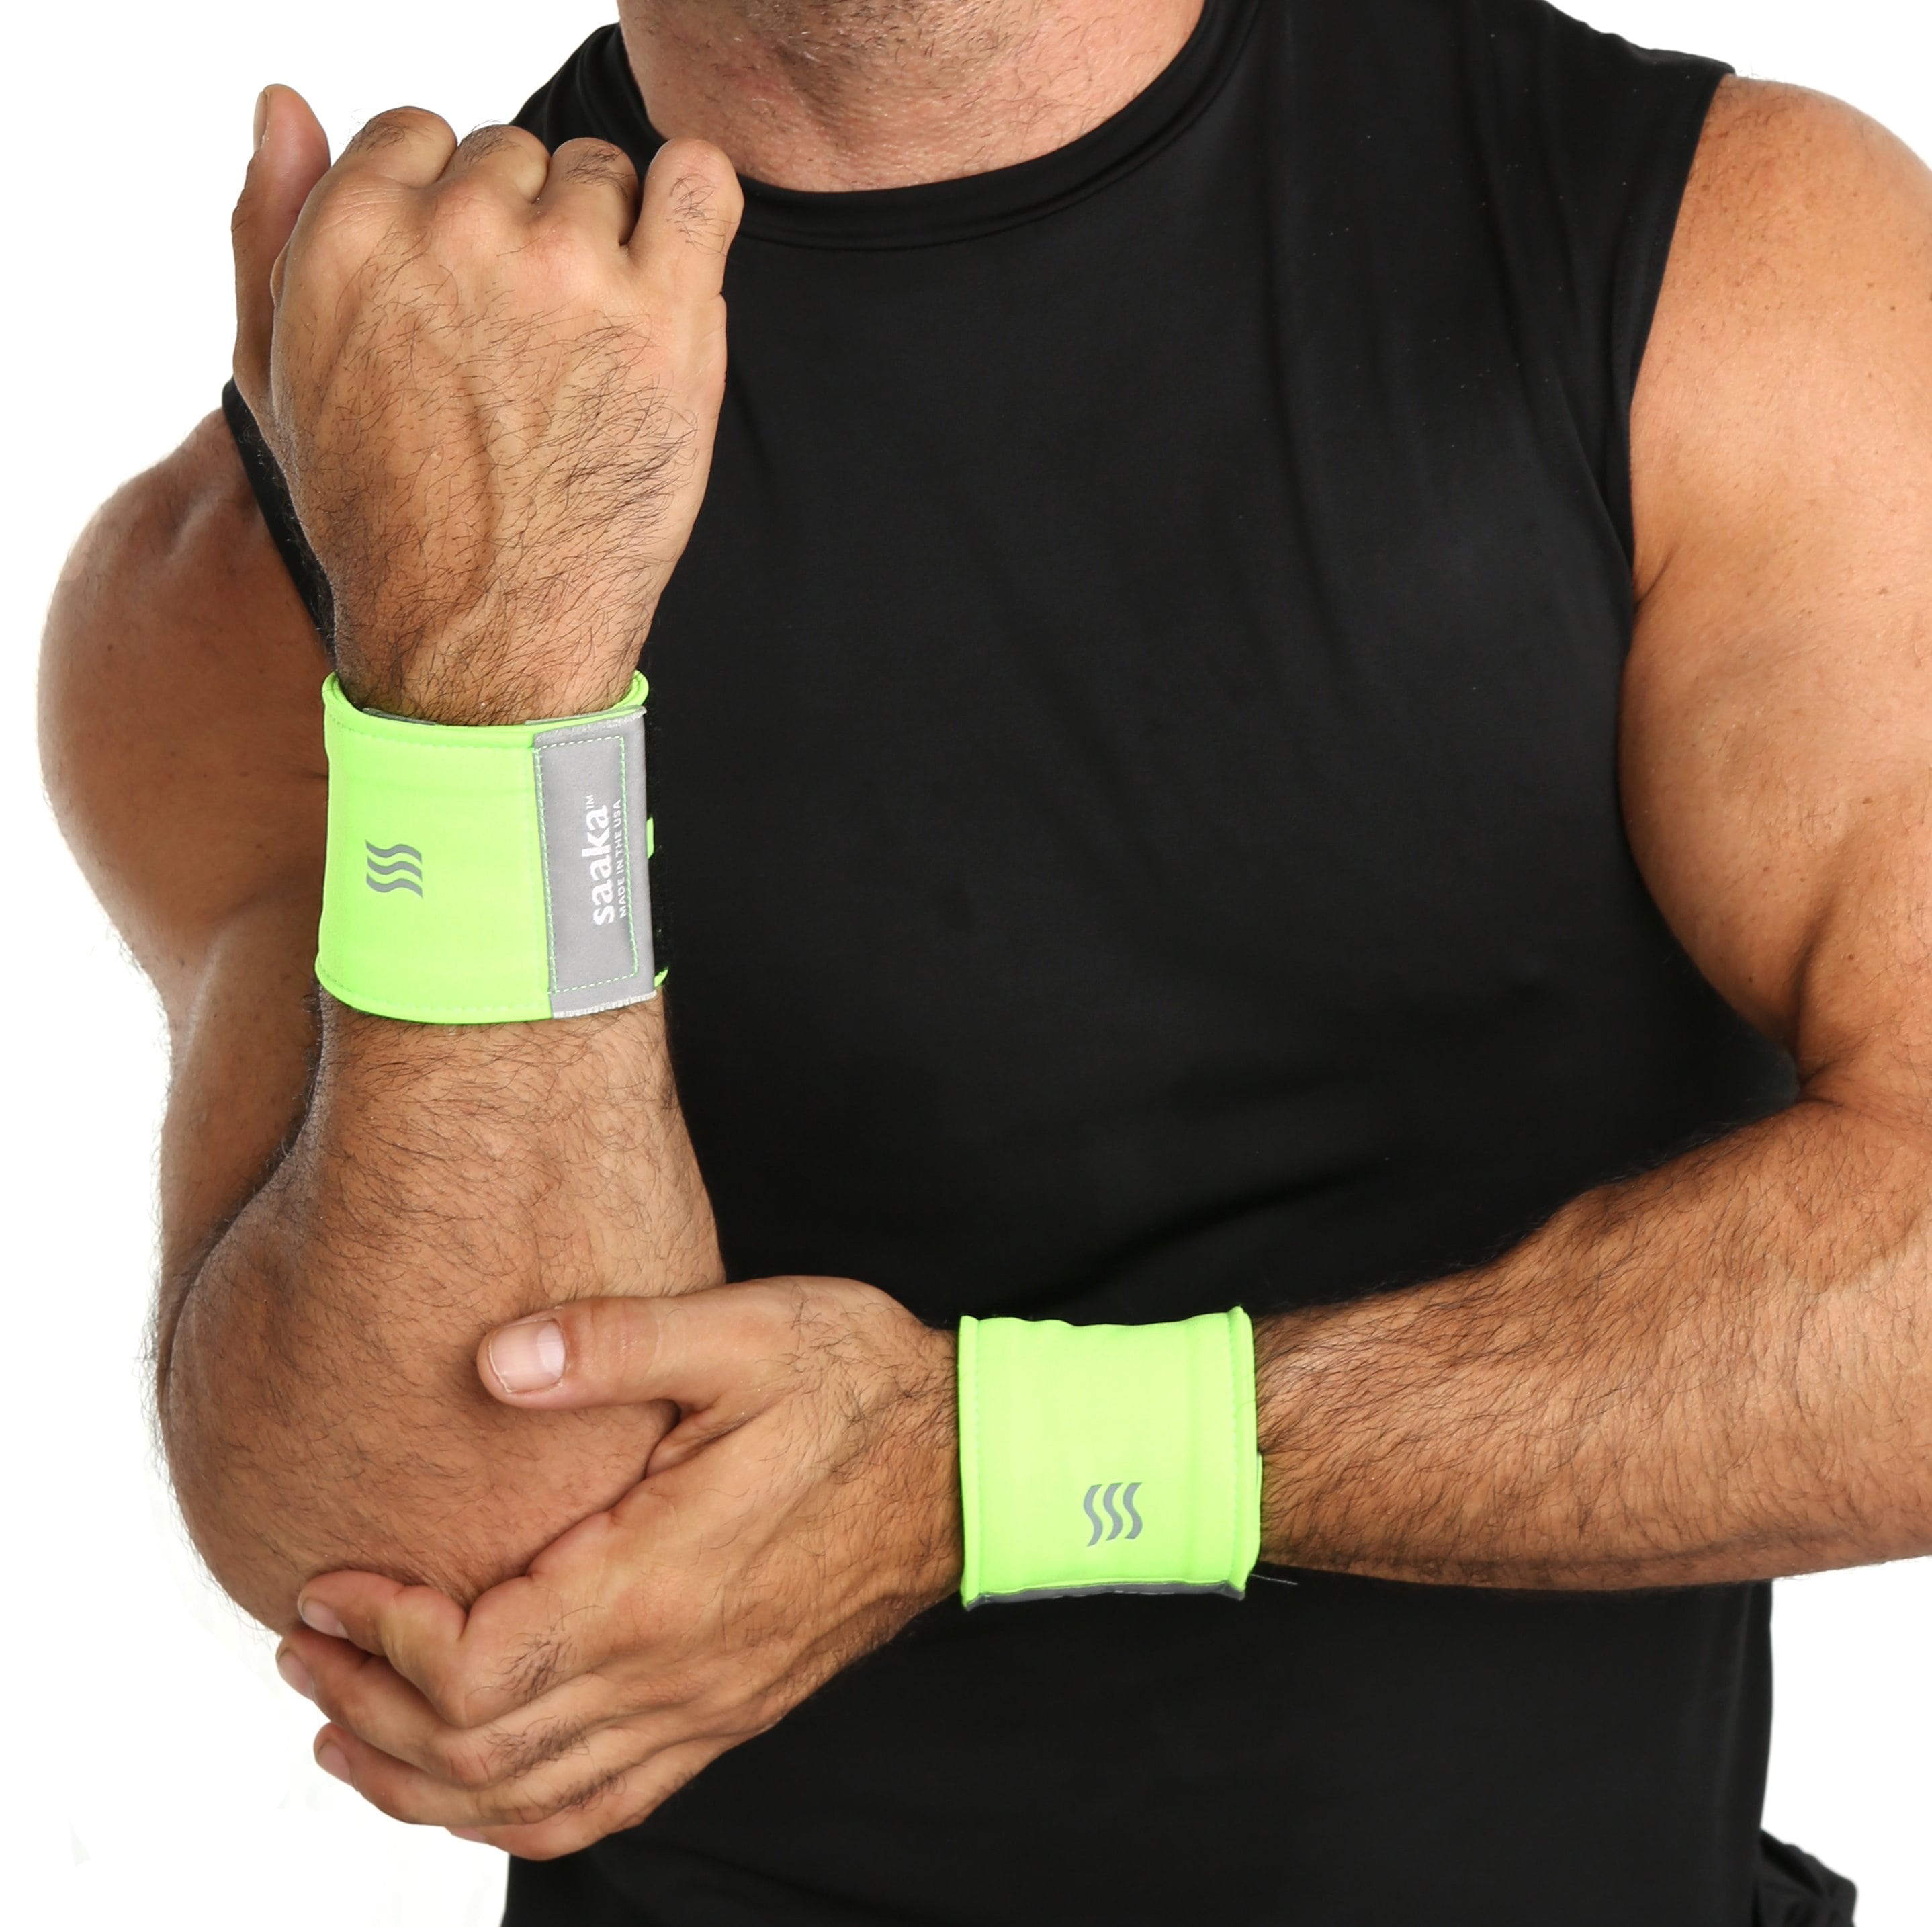 Guy wearing wrist sweatbands in a neon green color.